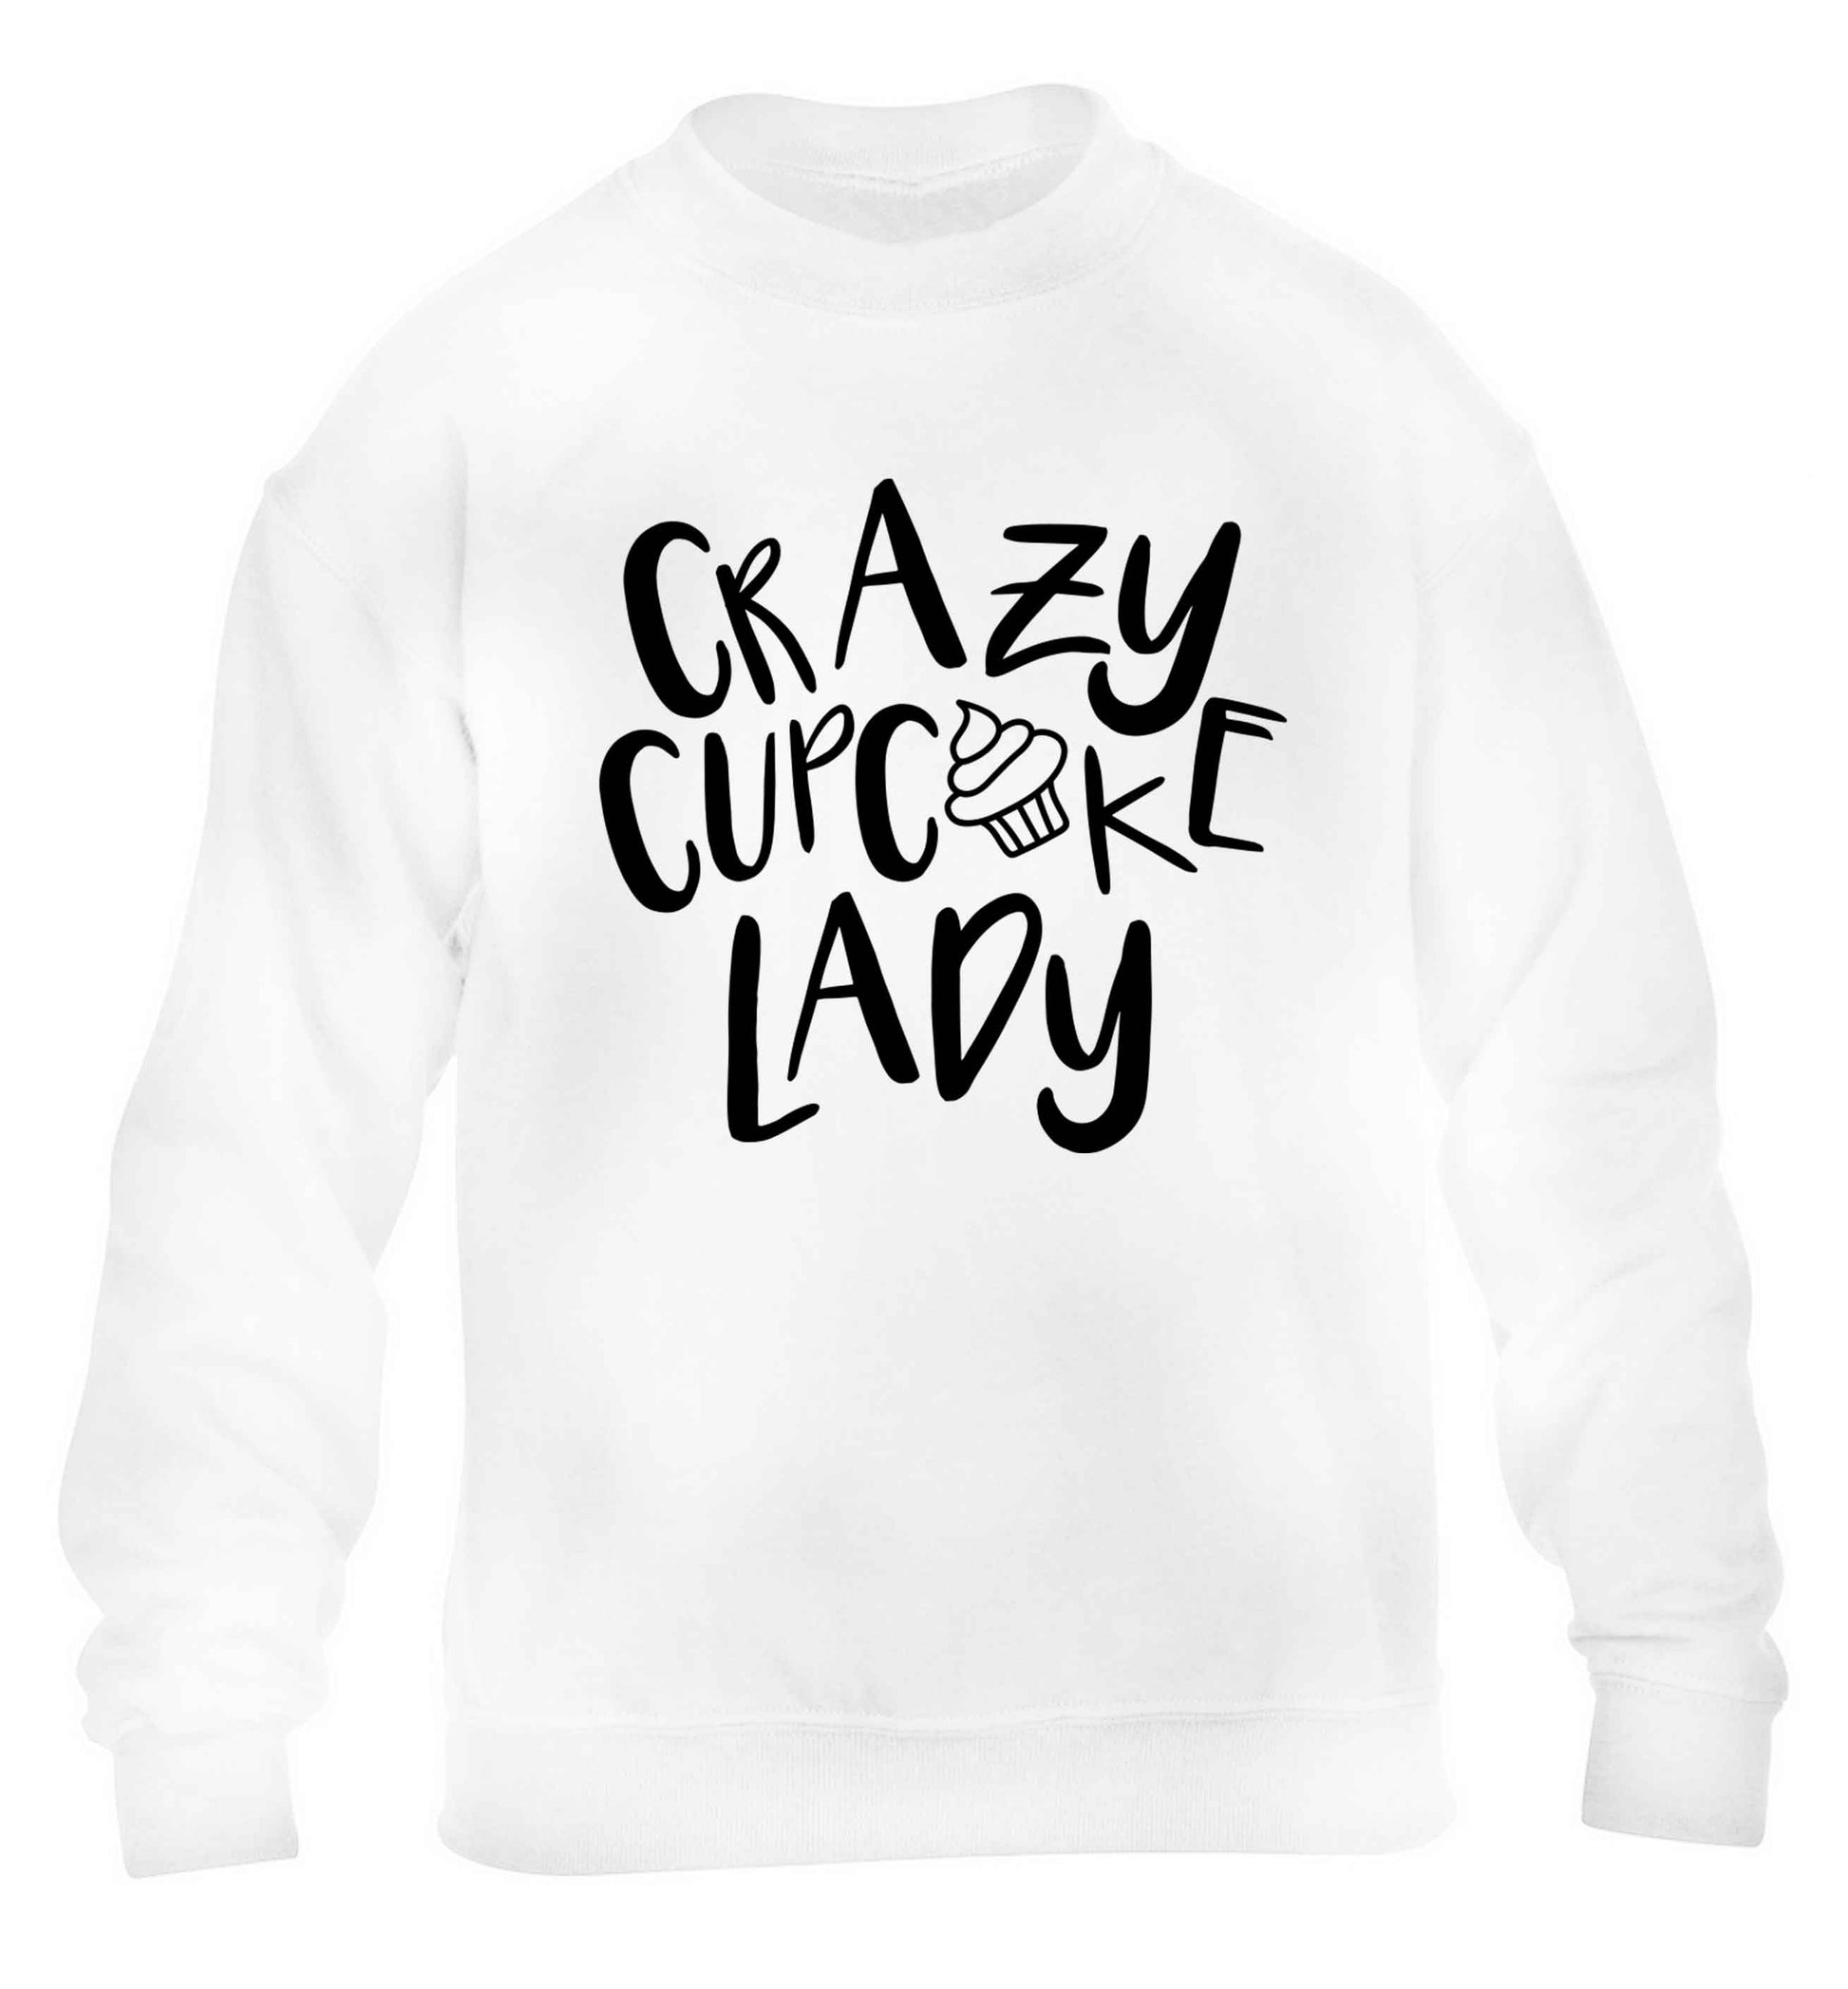 Crazy cupcake lady children's white sweater 12-13 Years